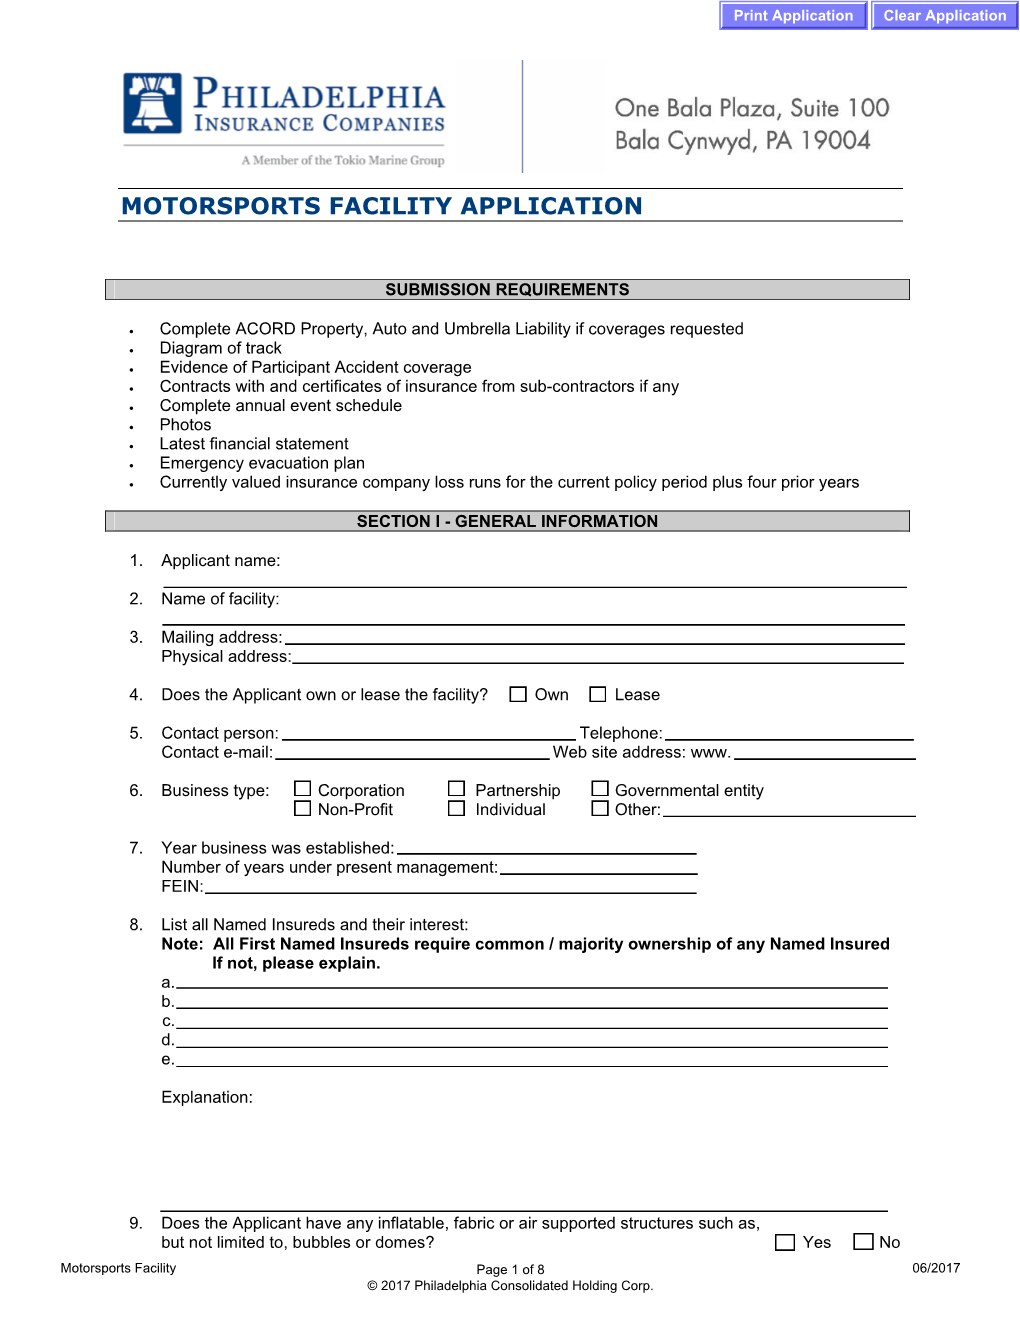 Motorsports Facility Application